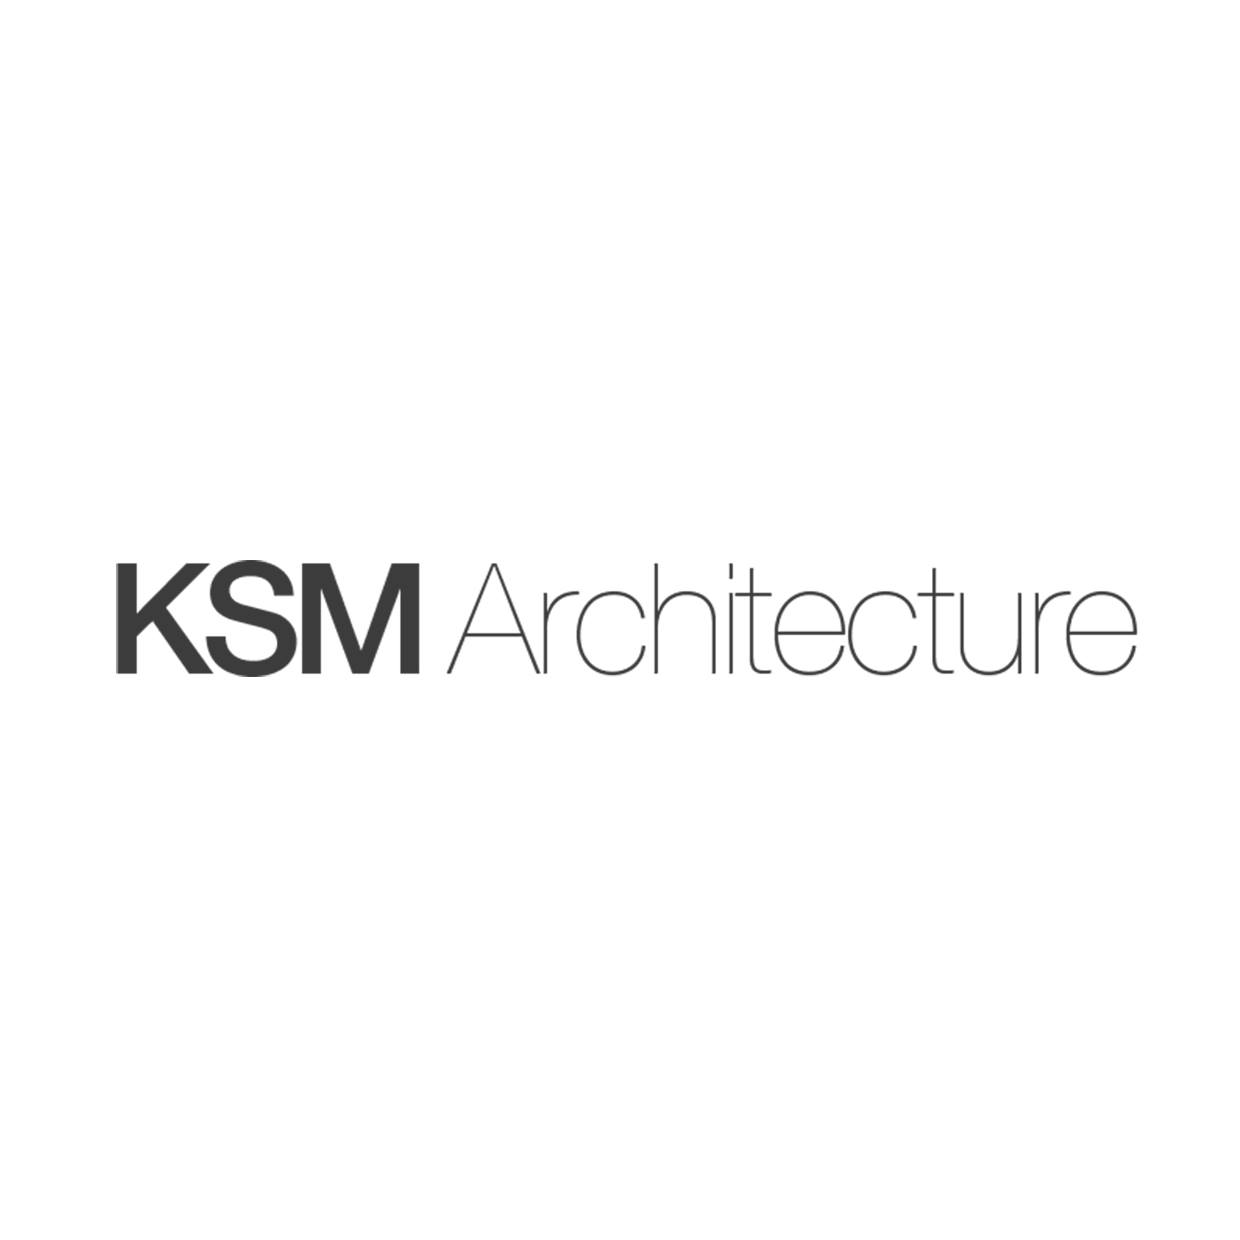 KSM Architecture|IT Services|Professional Services